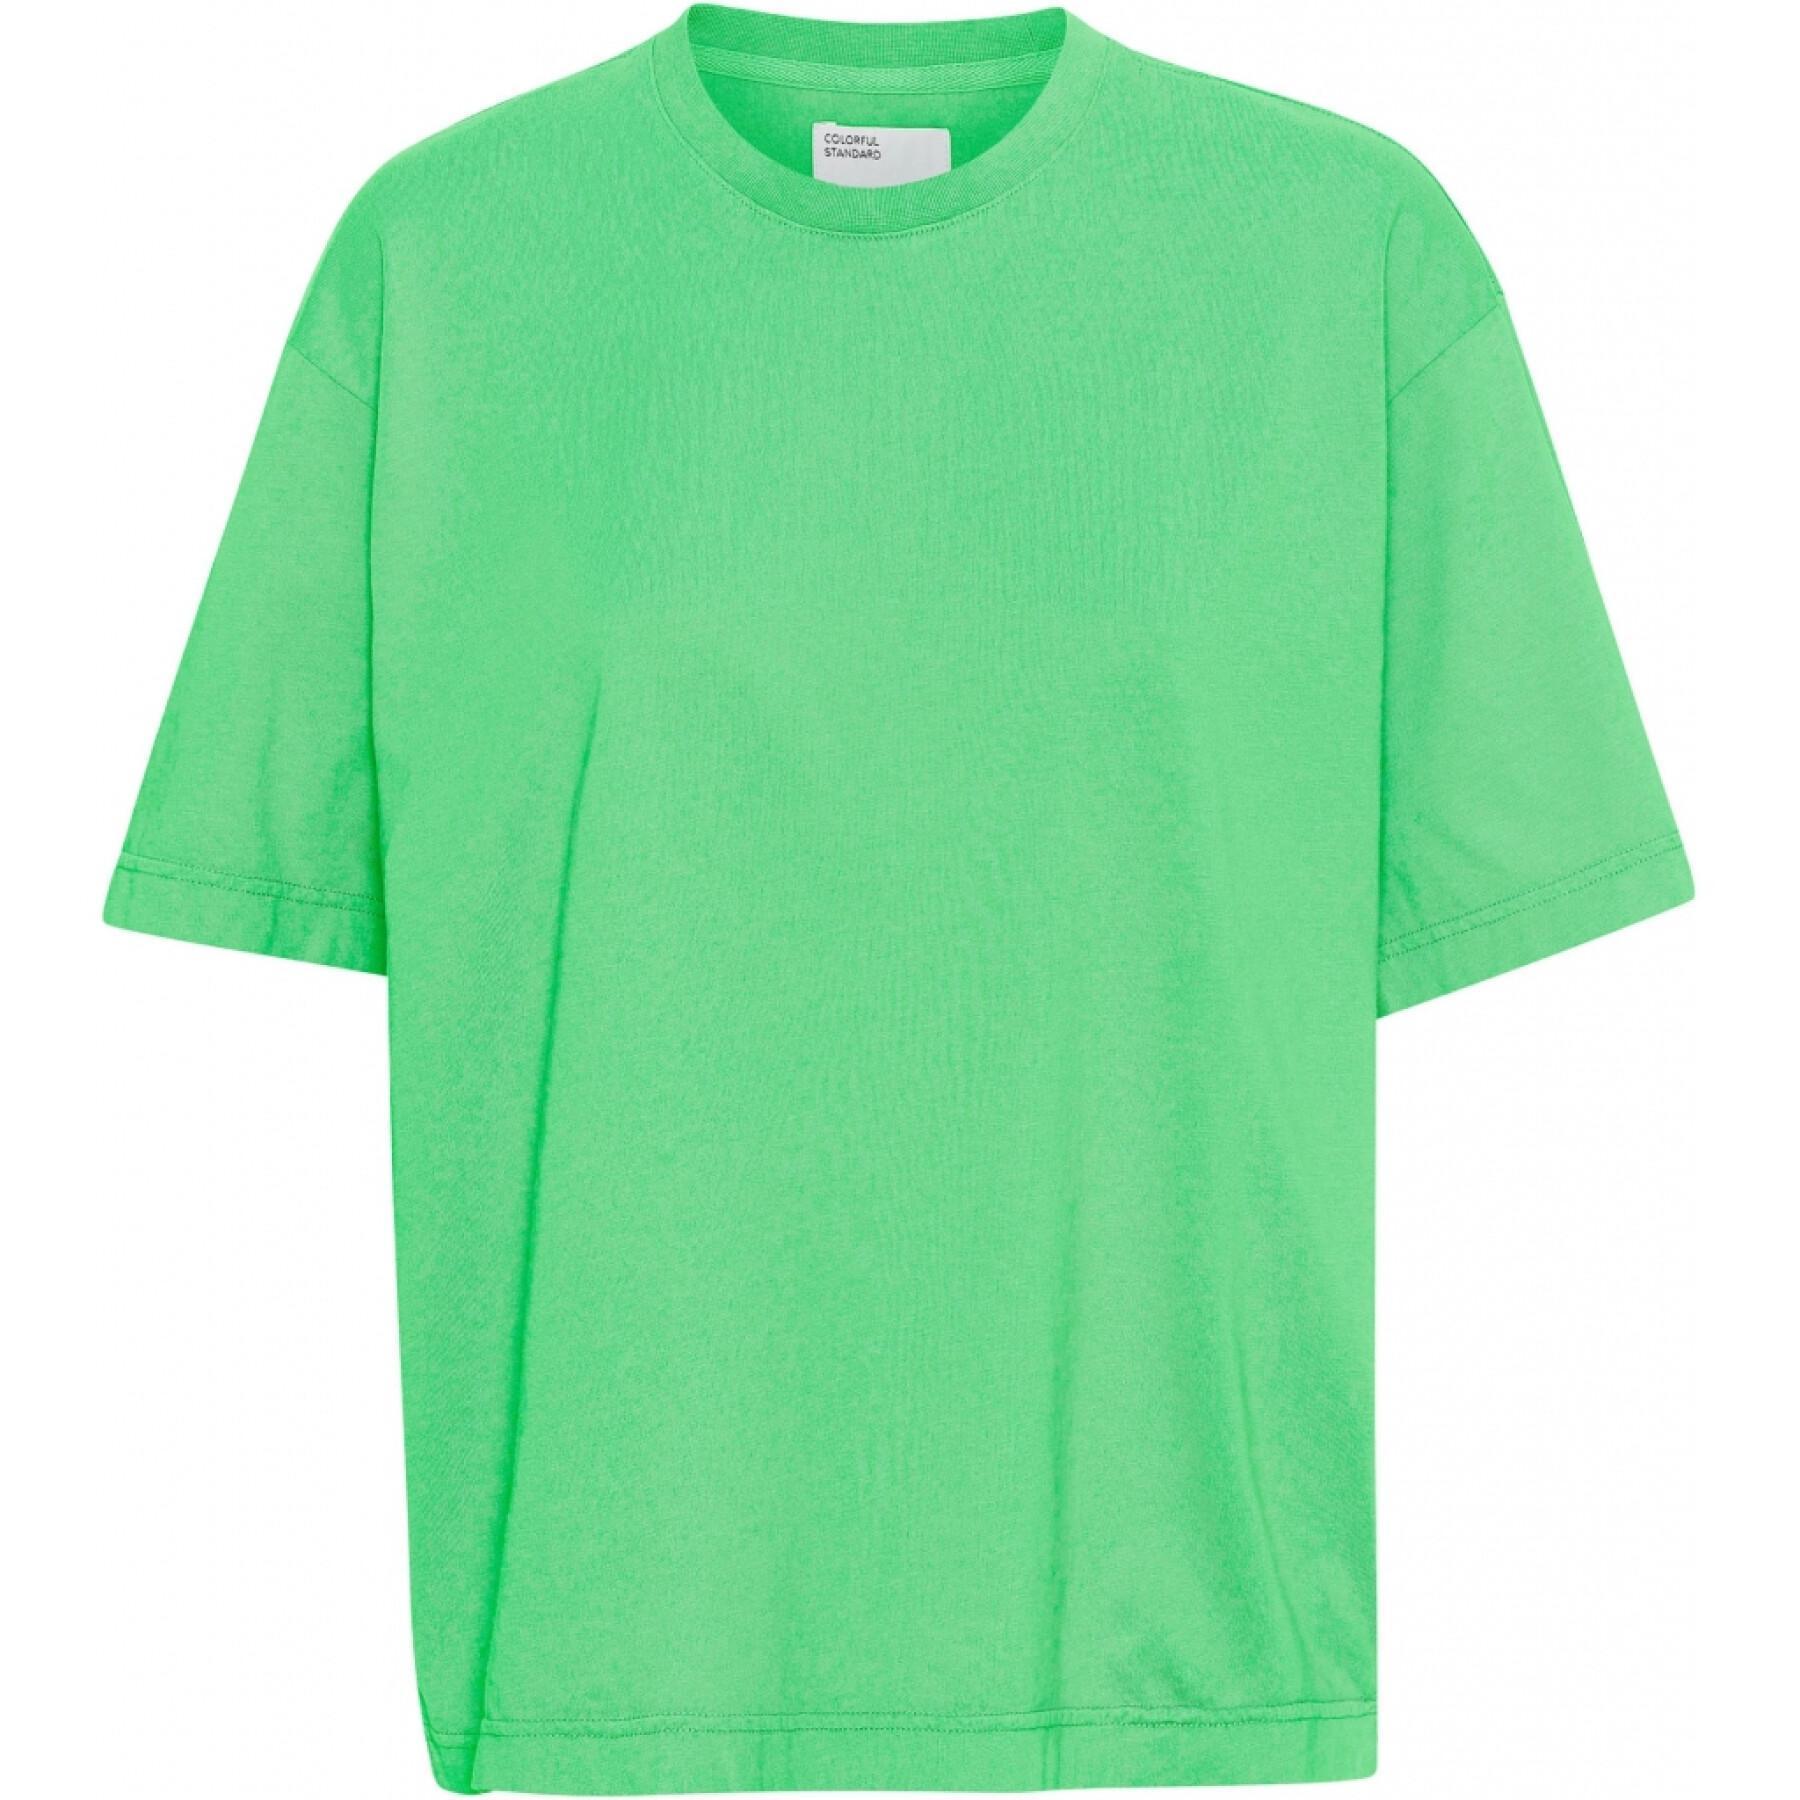 Women's T-shirt Colorful Standard Organic oversized spring green